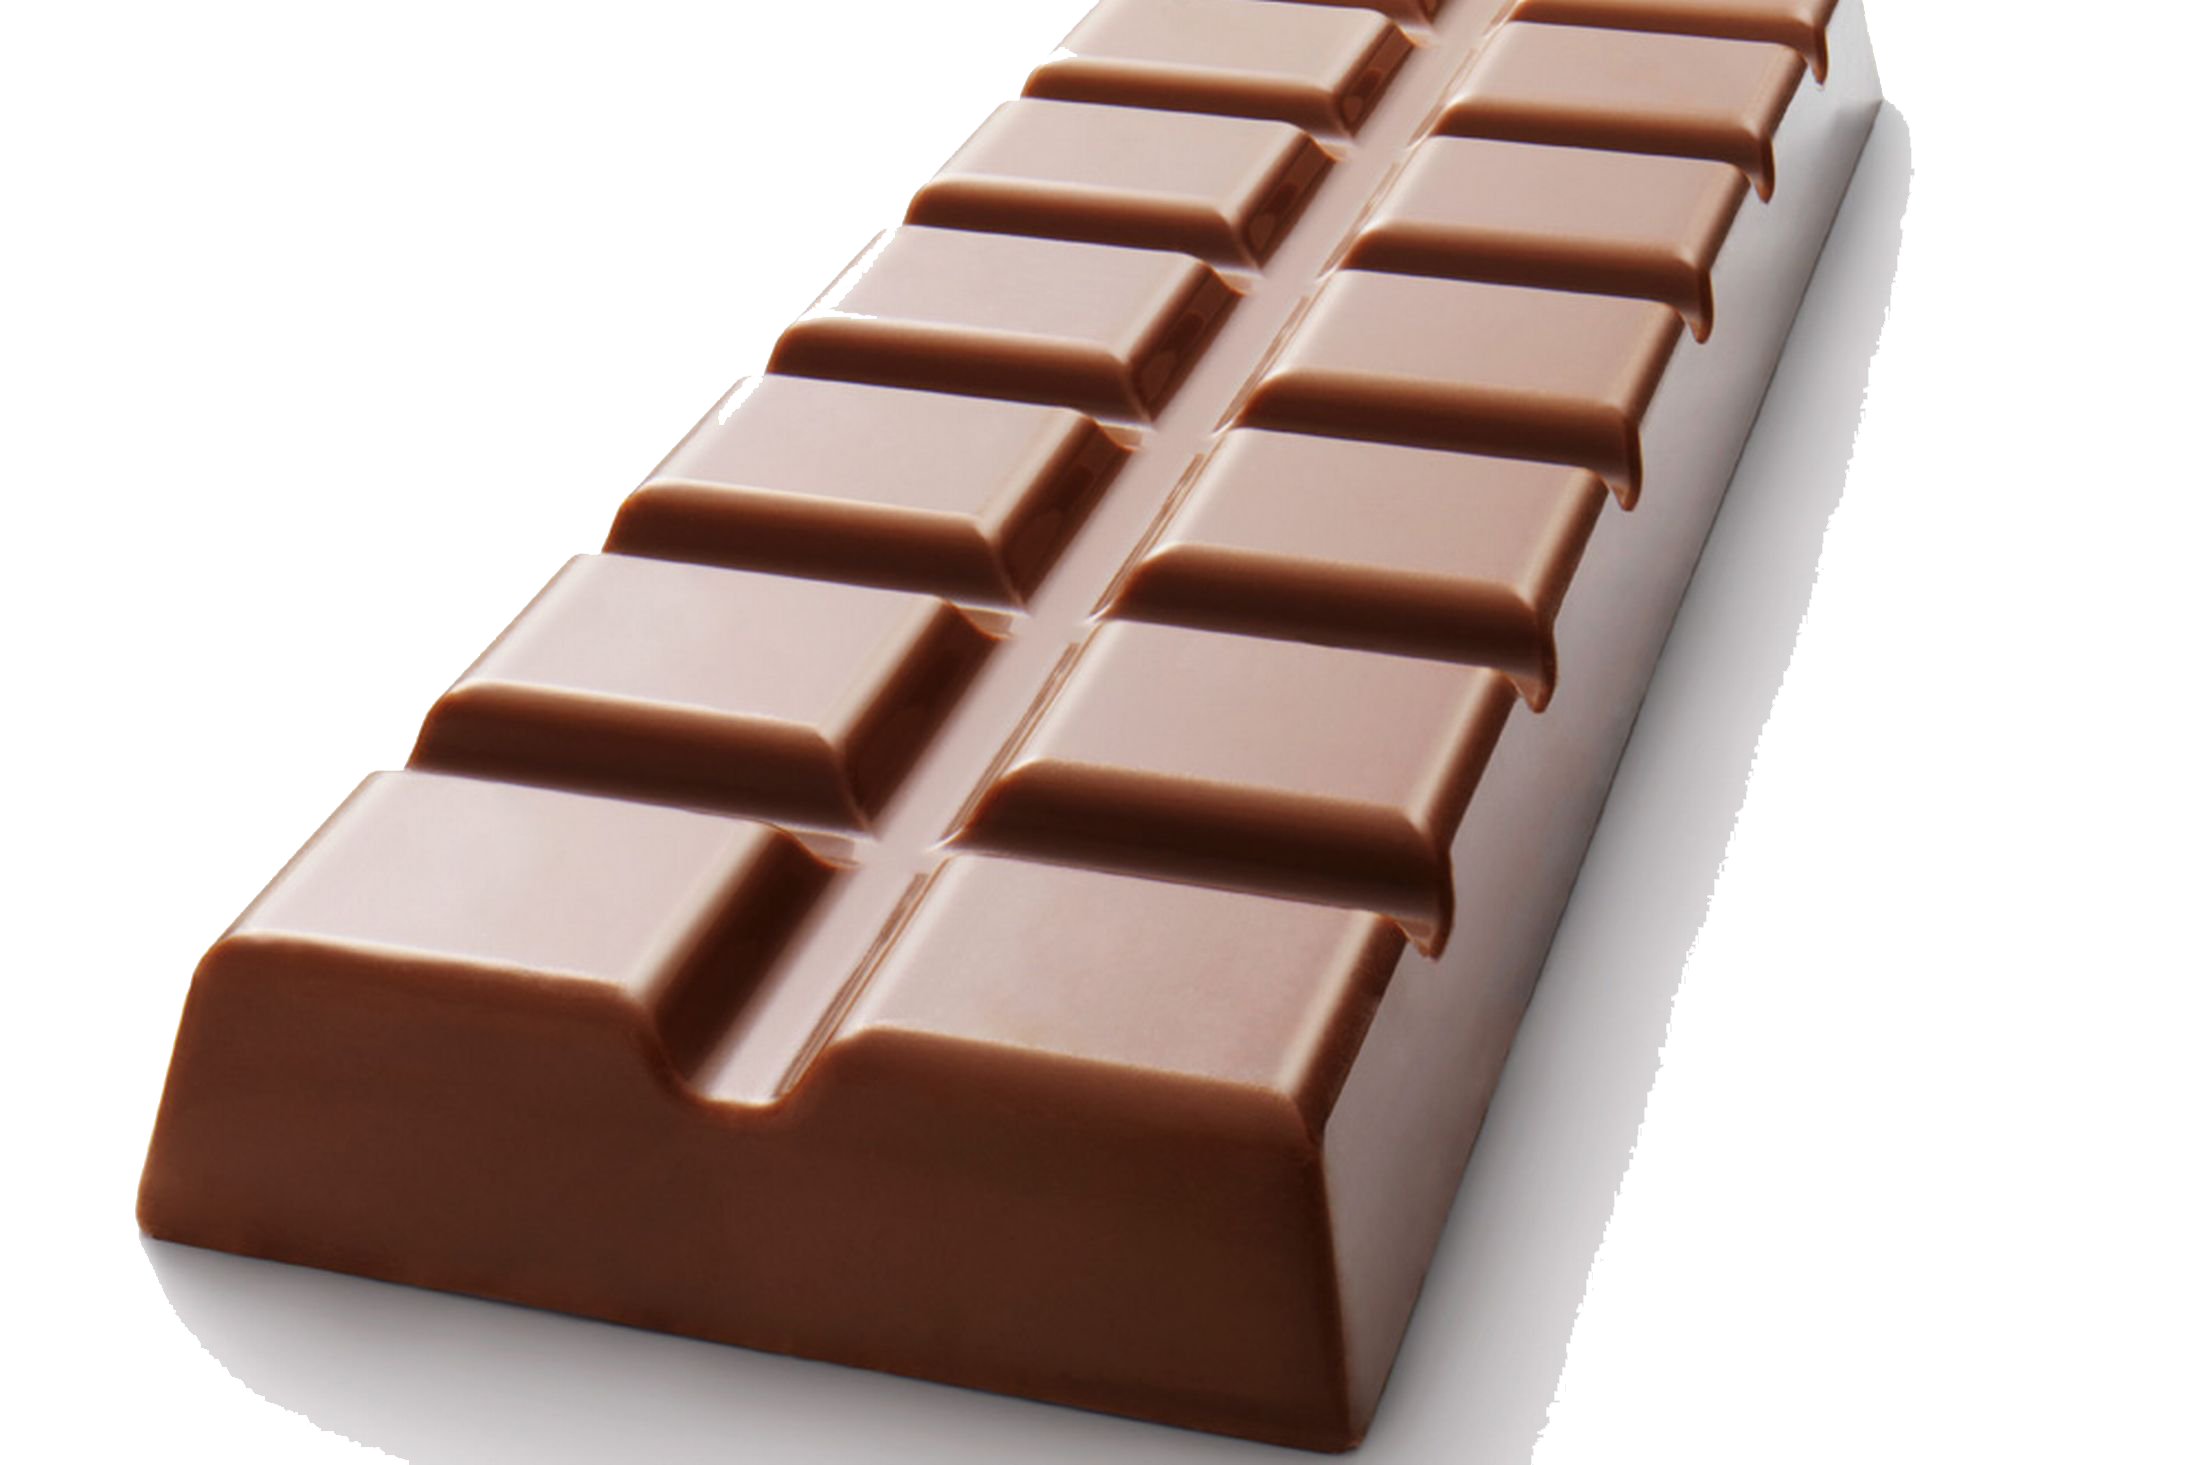 Chocolate Bar Png